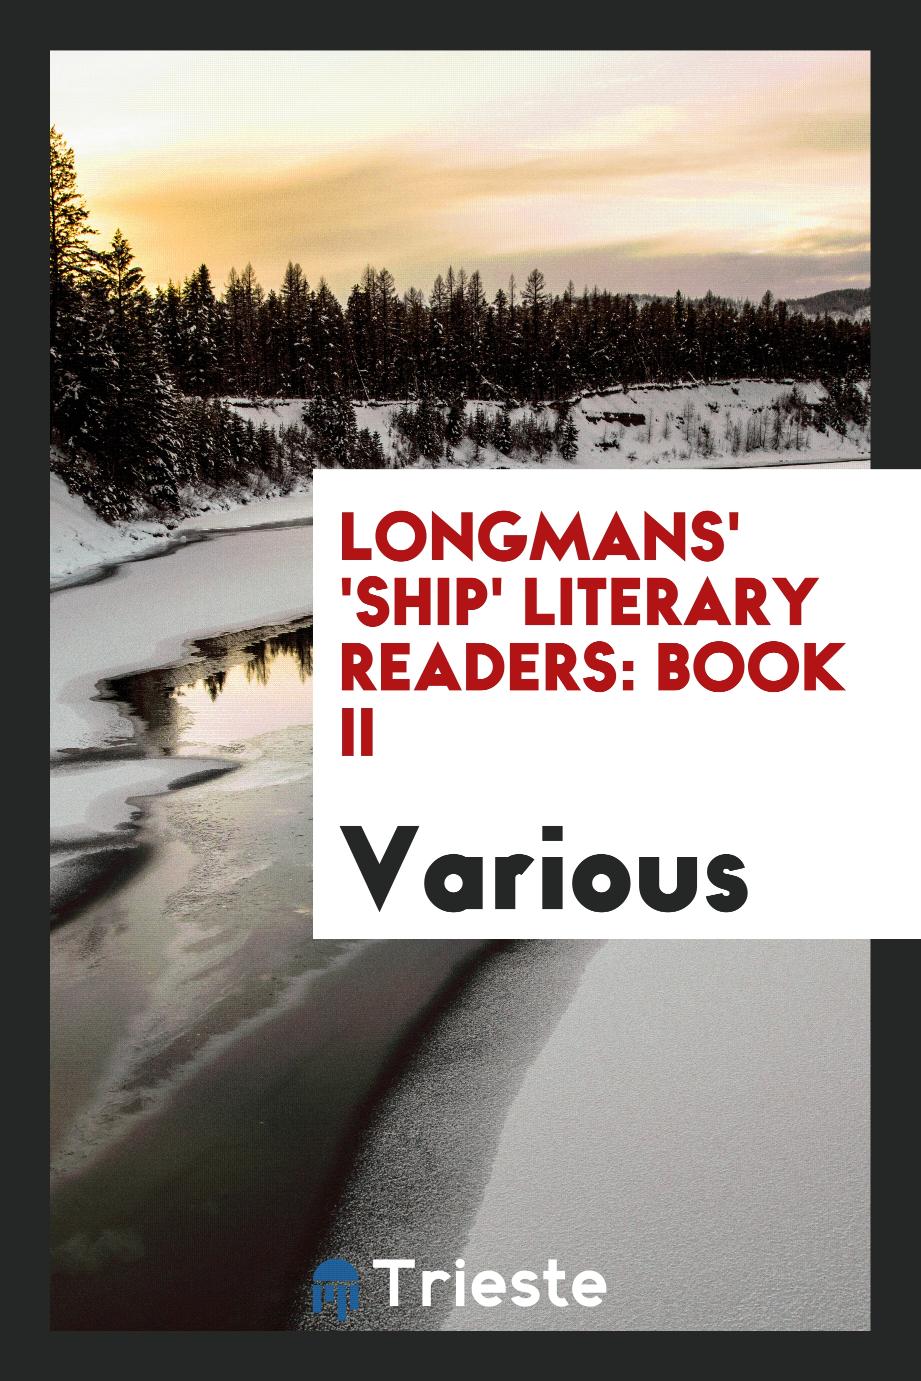 Longmans' 'Ship' Literary Readers: Book II